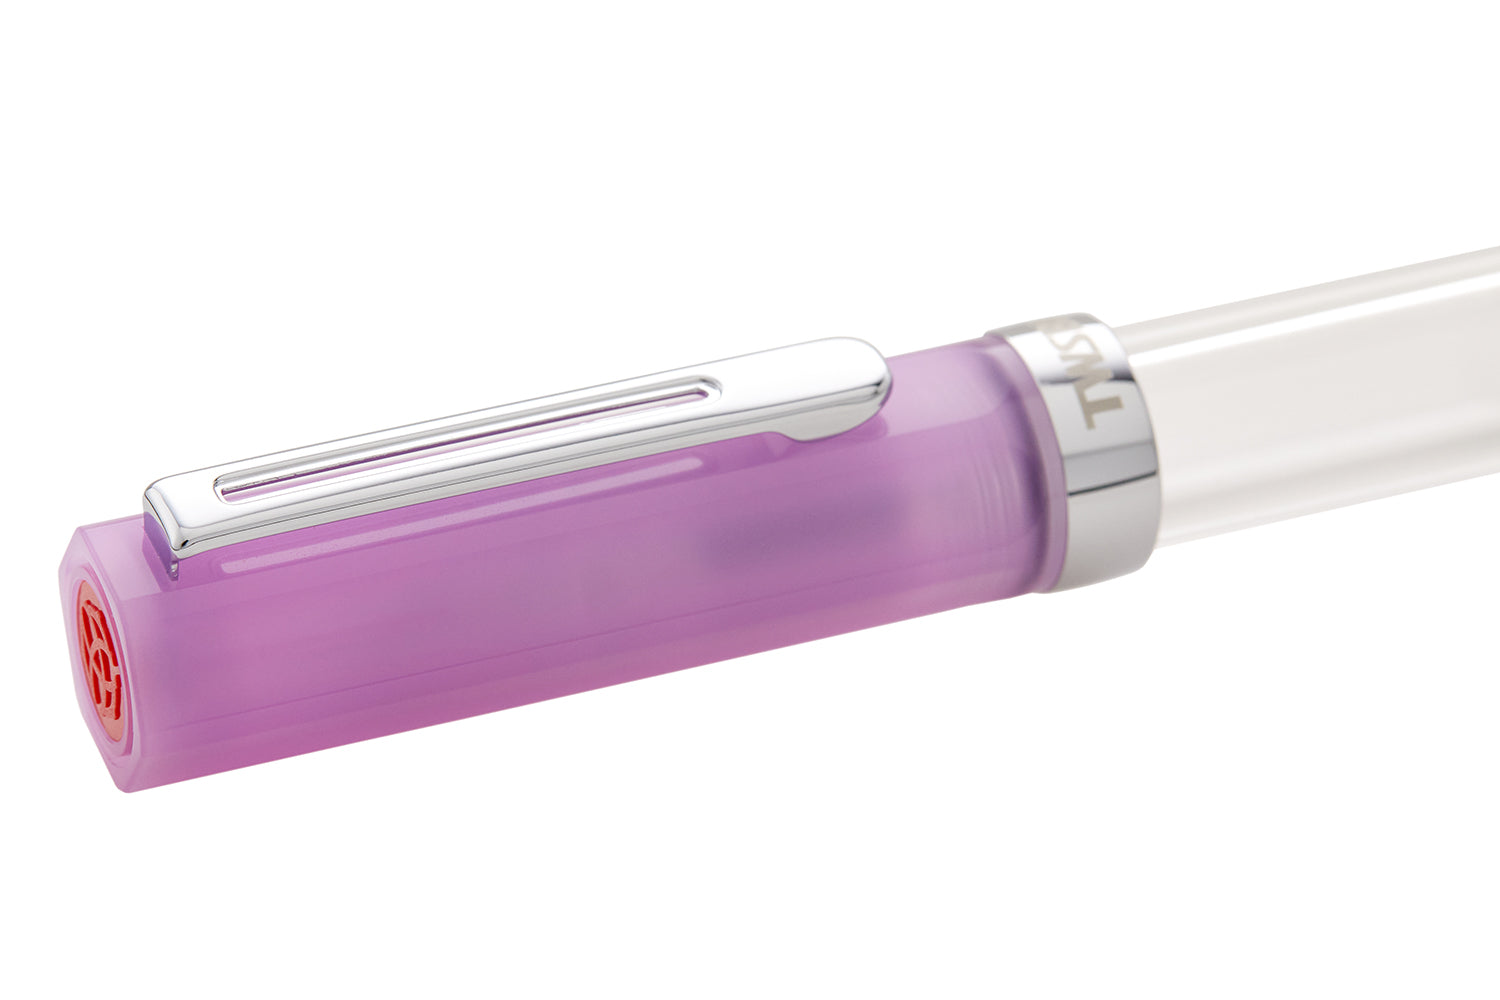 TWSBI Eco Fountain Pen - Glow Purple - Extra-Fine